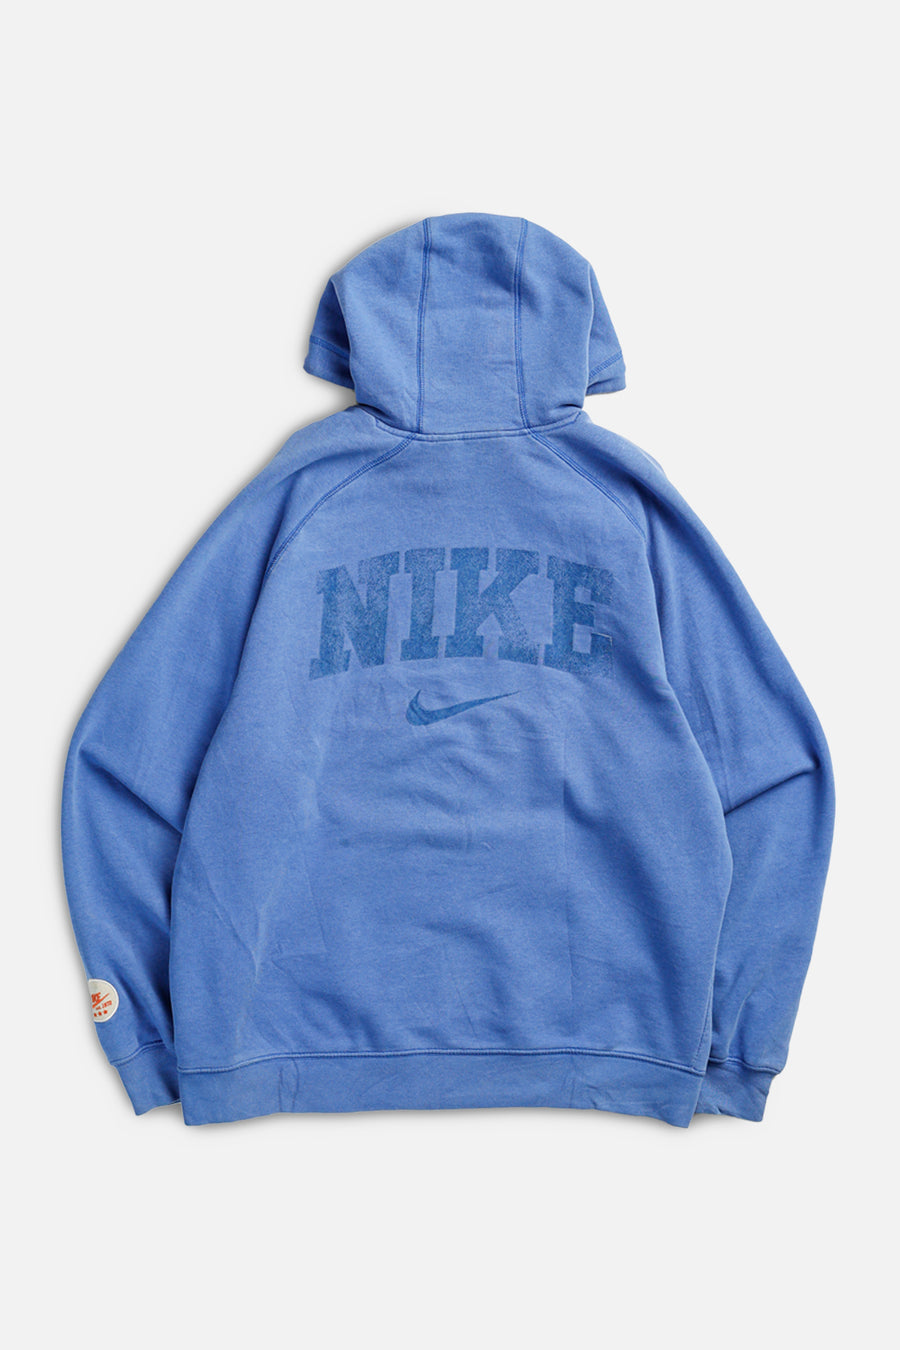 Vintage Nike Basketball Sweatshirt - L